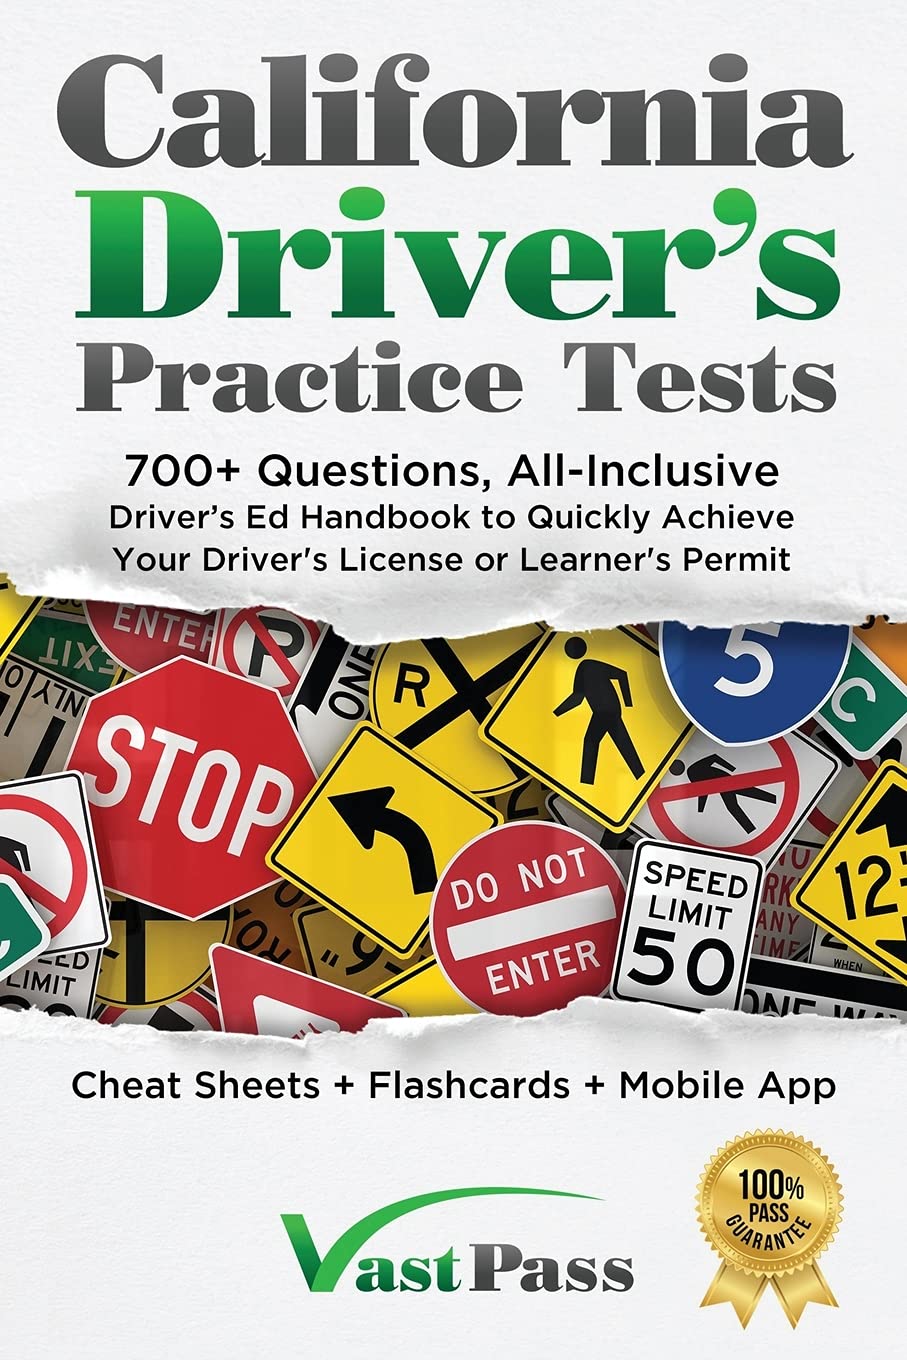 California Driver's Practice Tests - SureShot Books Publishing LLC